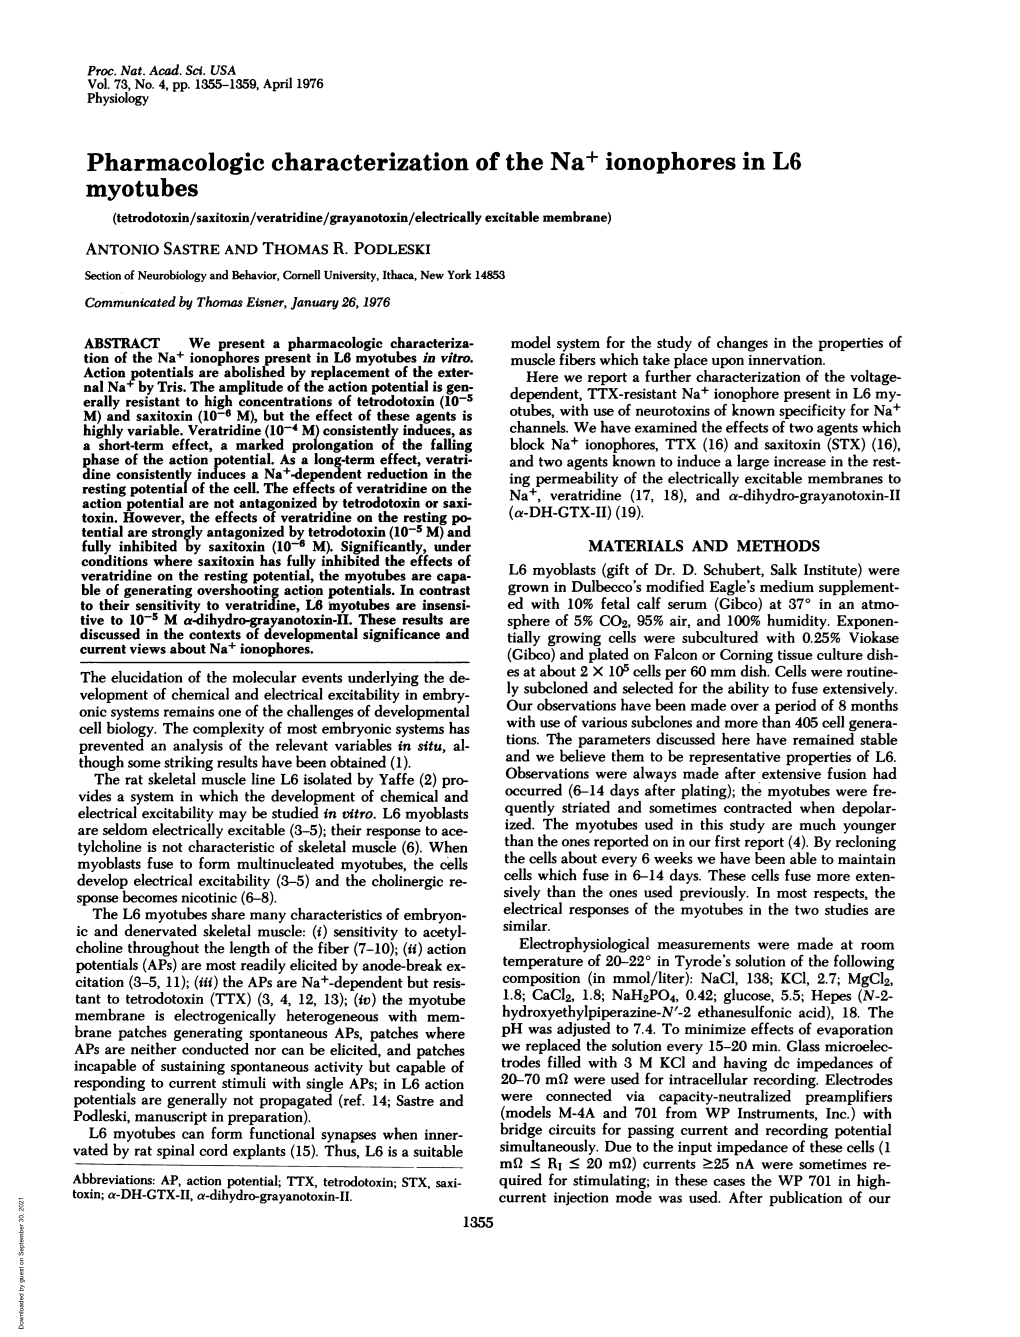 Myotubes (Tetrodotoxin/Saxitoxin/Veratridine/Grayanotoxin/Electrically Excitable Membrane) ANTONIO SASTRE and THOMAS R